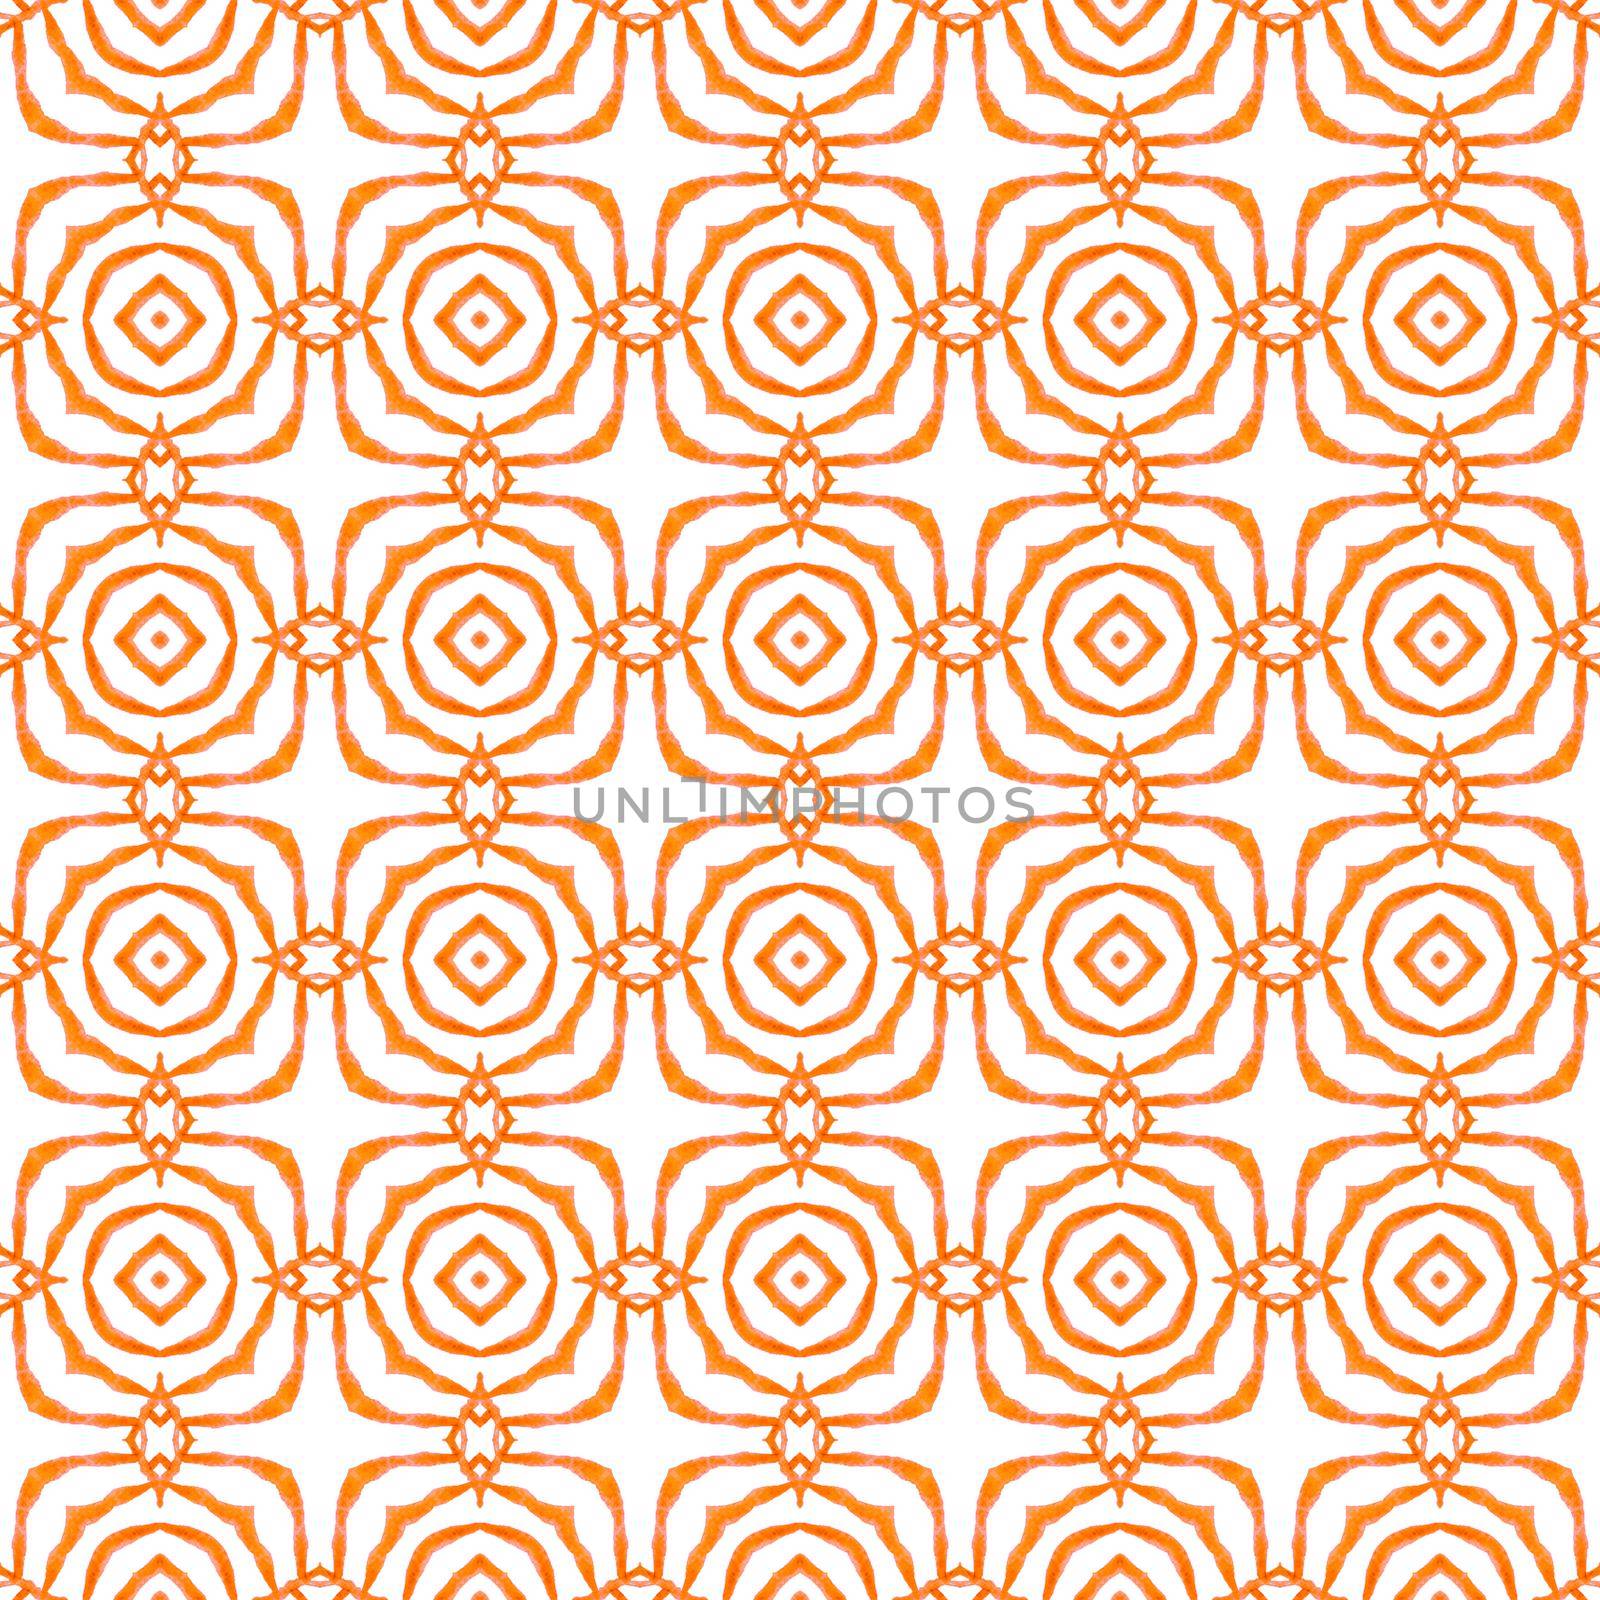 Chevron watercolor pattern. Orange worthy boho chic summer design. Green geometric chevron watercolor border. Textile ready mesmeric print, swimwear fabric, wallpaper, wrapping.